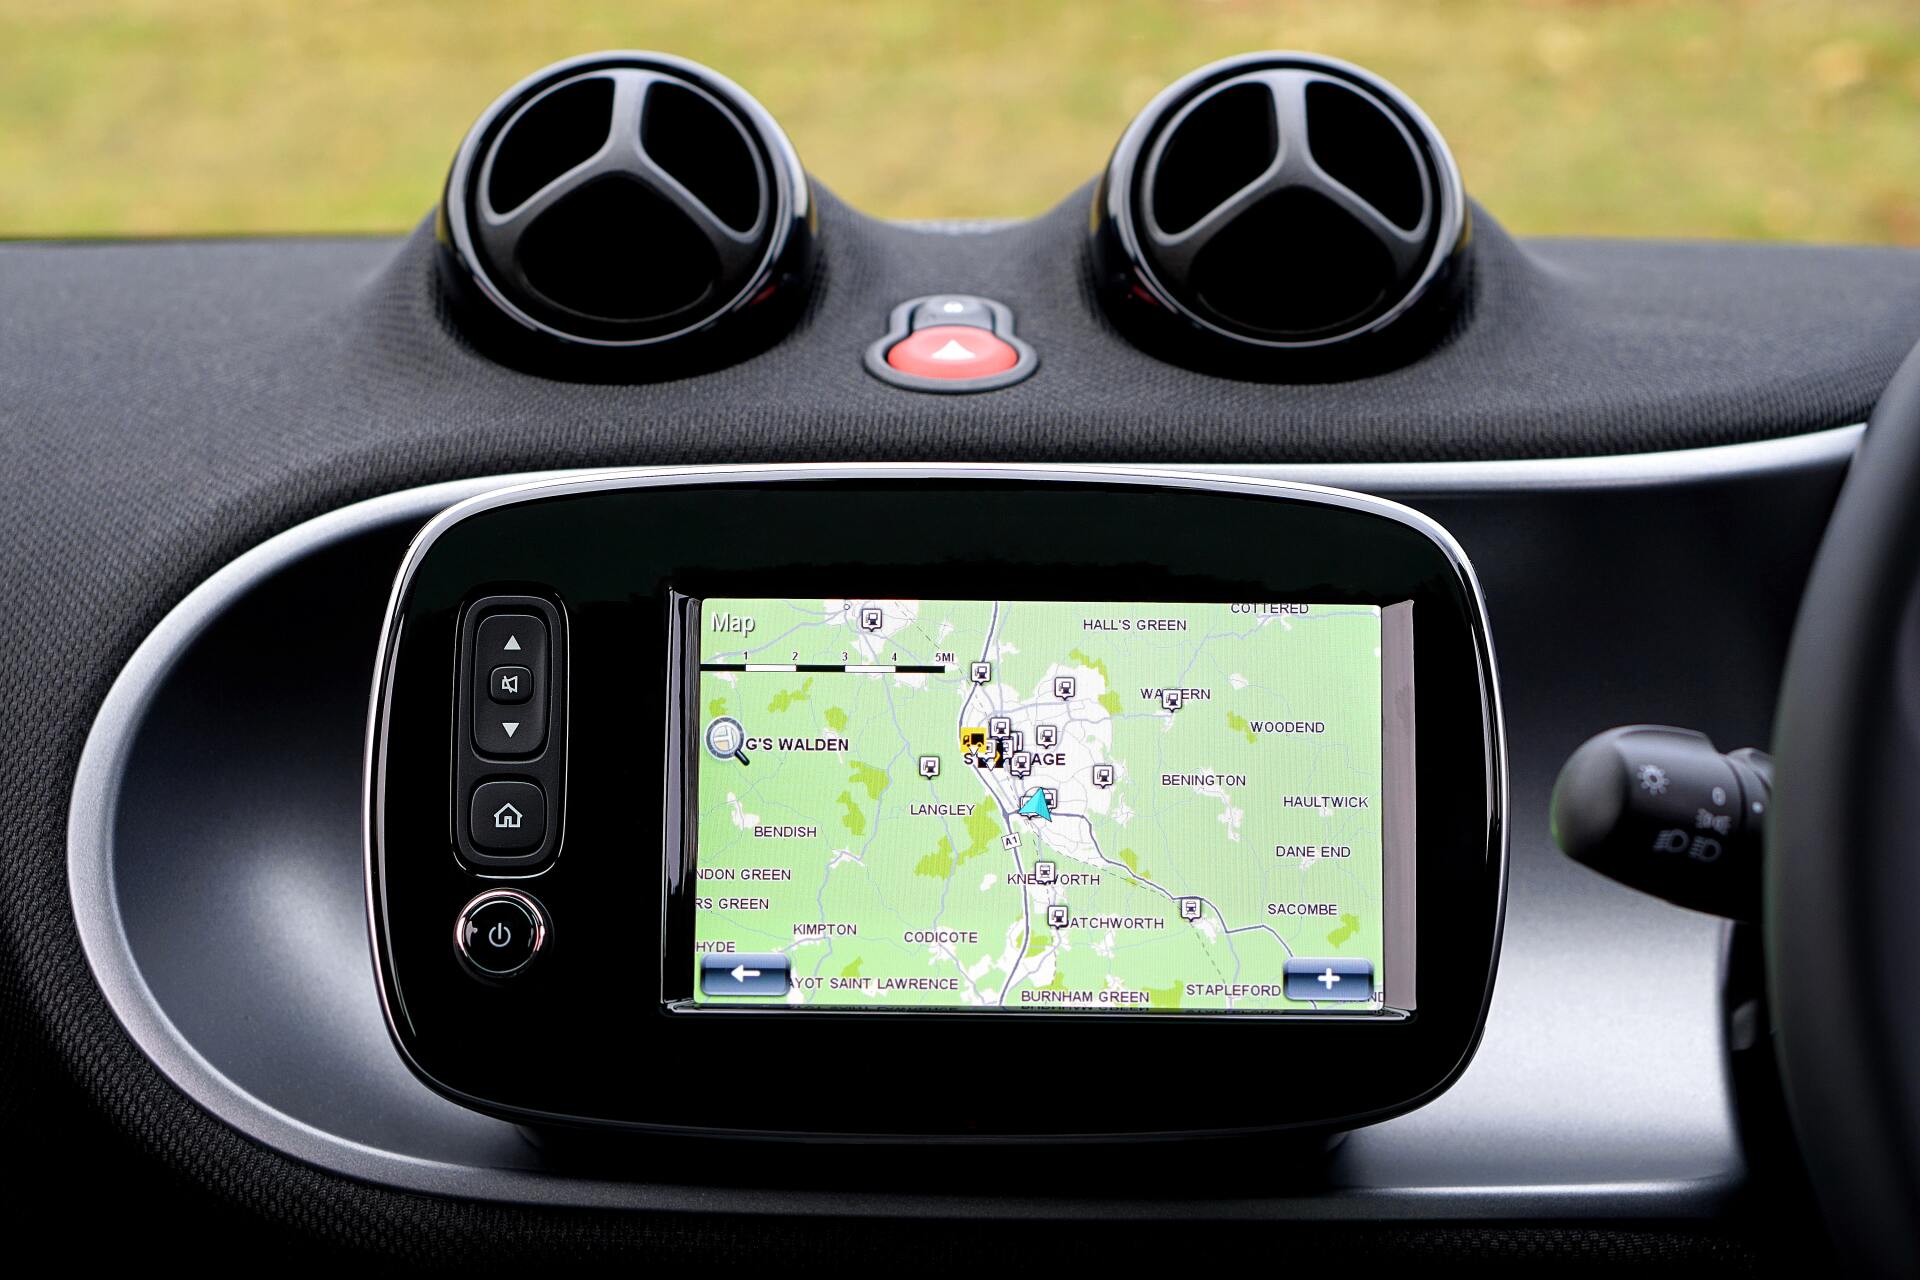 Navigation System on Vehicle Dashboard